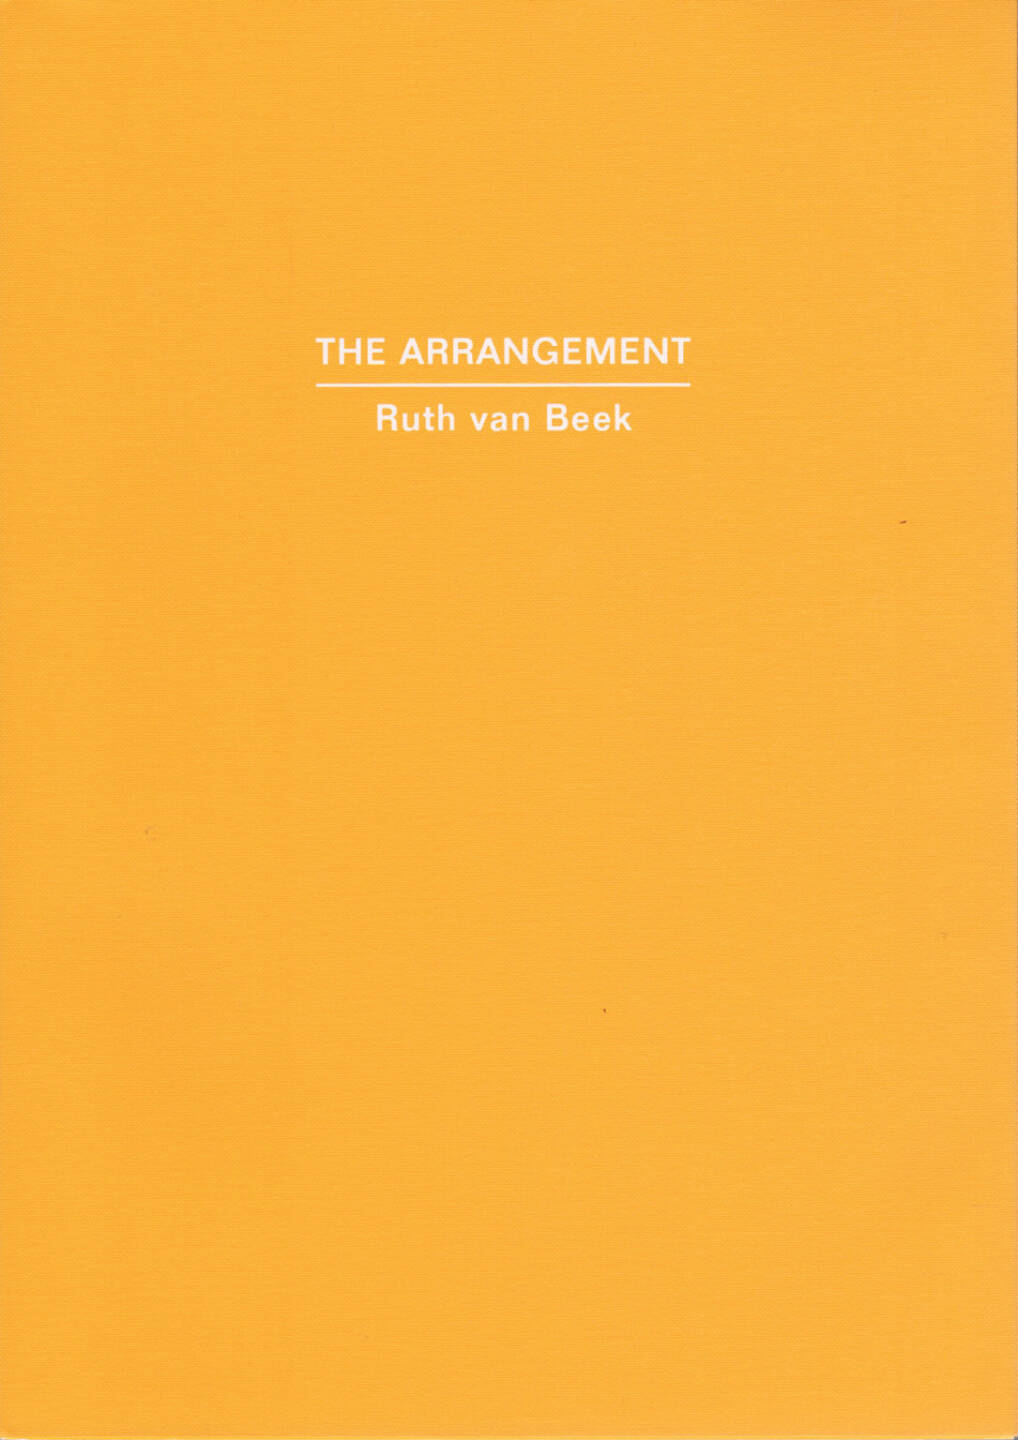 Ruth van Beek - The Arrangement, RVB Books 2013, Cover - http://josefchladek.com/book/ruth_van_beek_-_the_arrangement